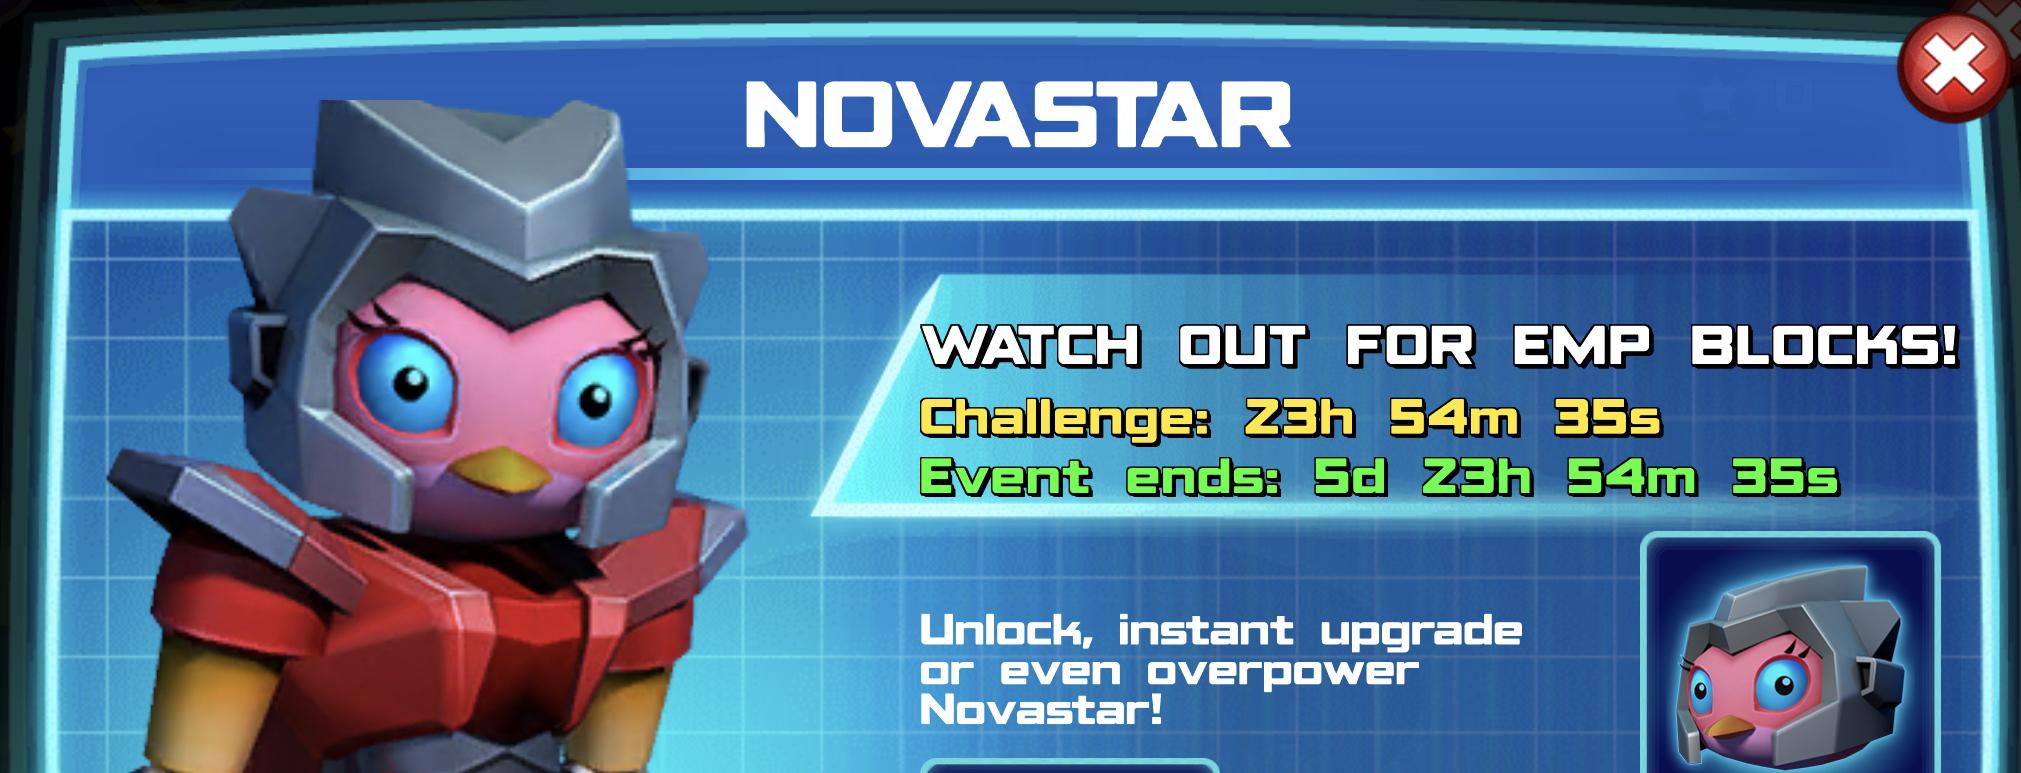 The event banner for Novastar